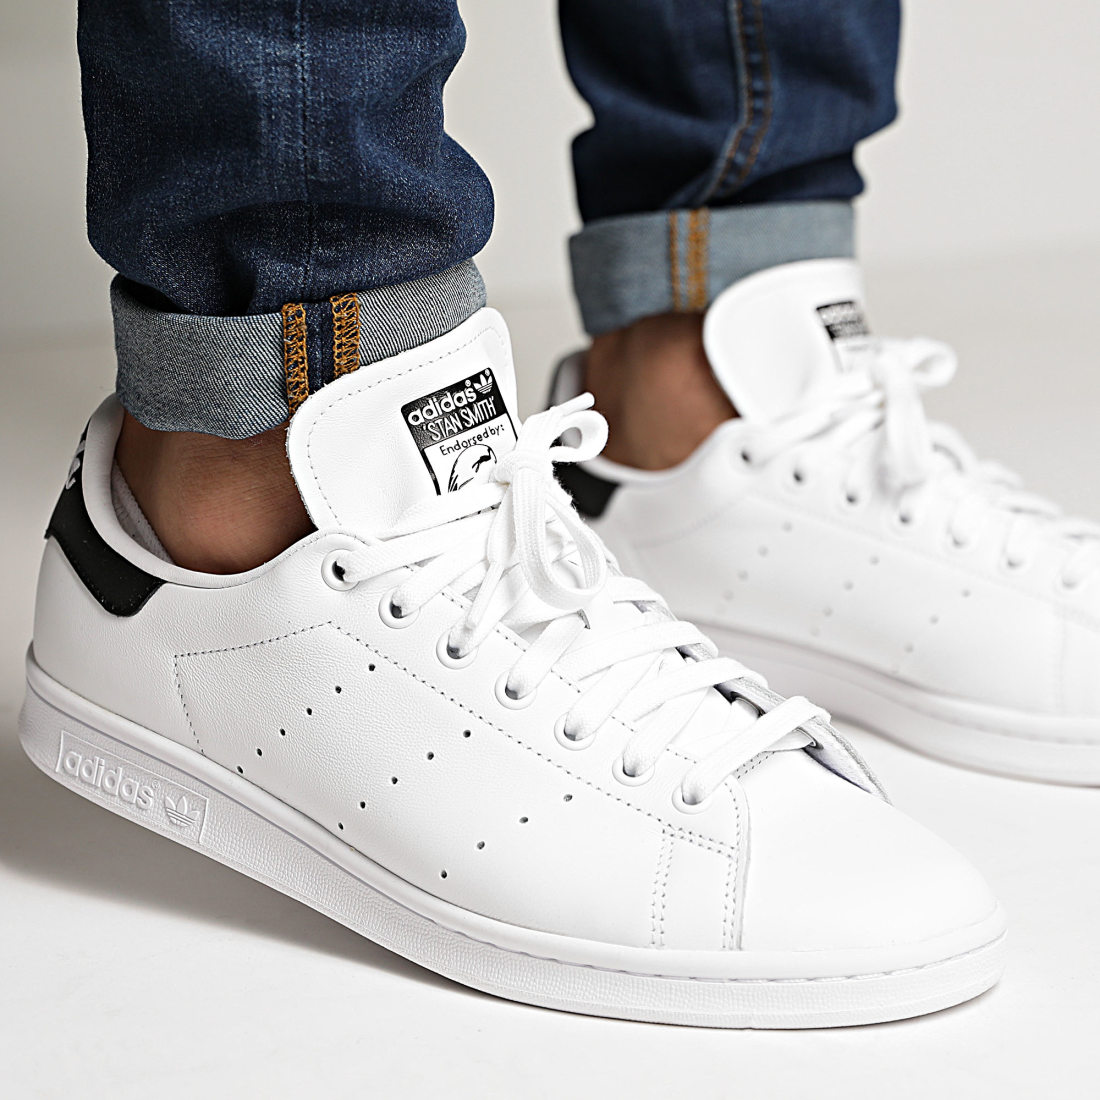 Adidas Stan Smith Footwear White/Core Black - EE5818